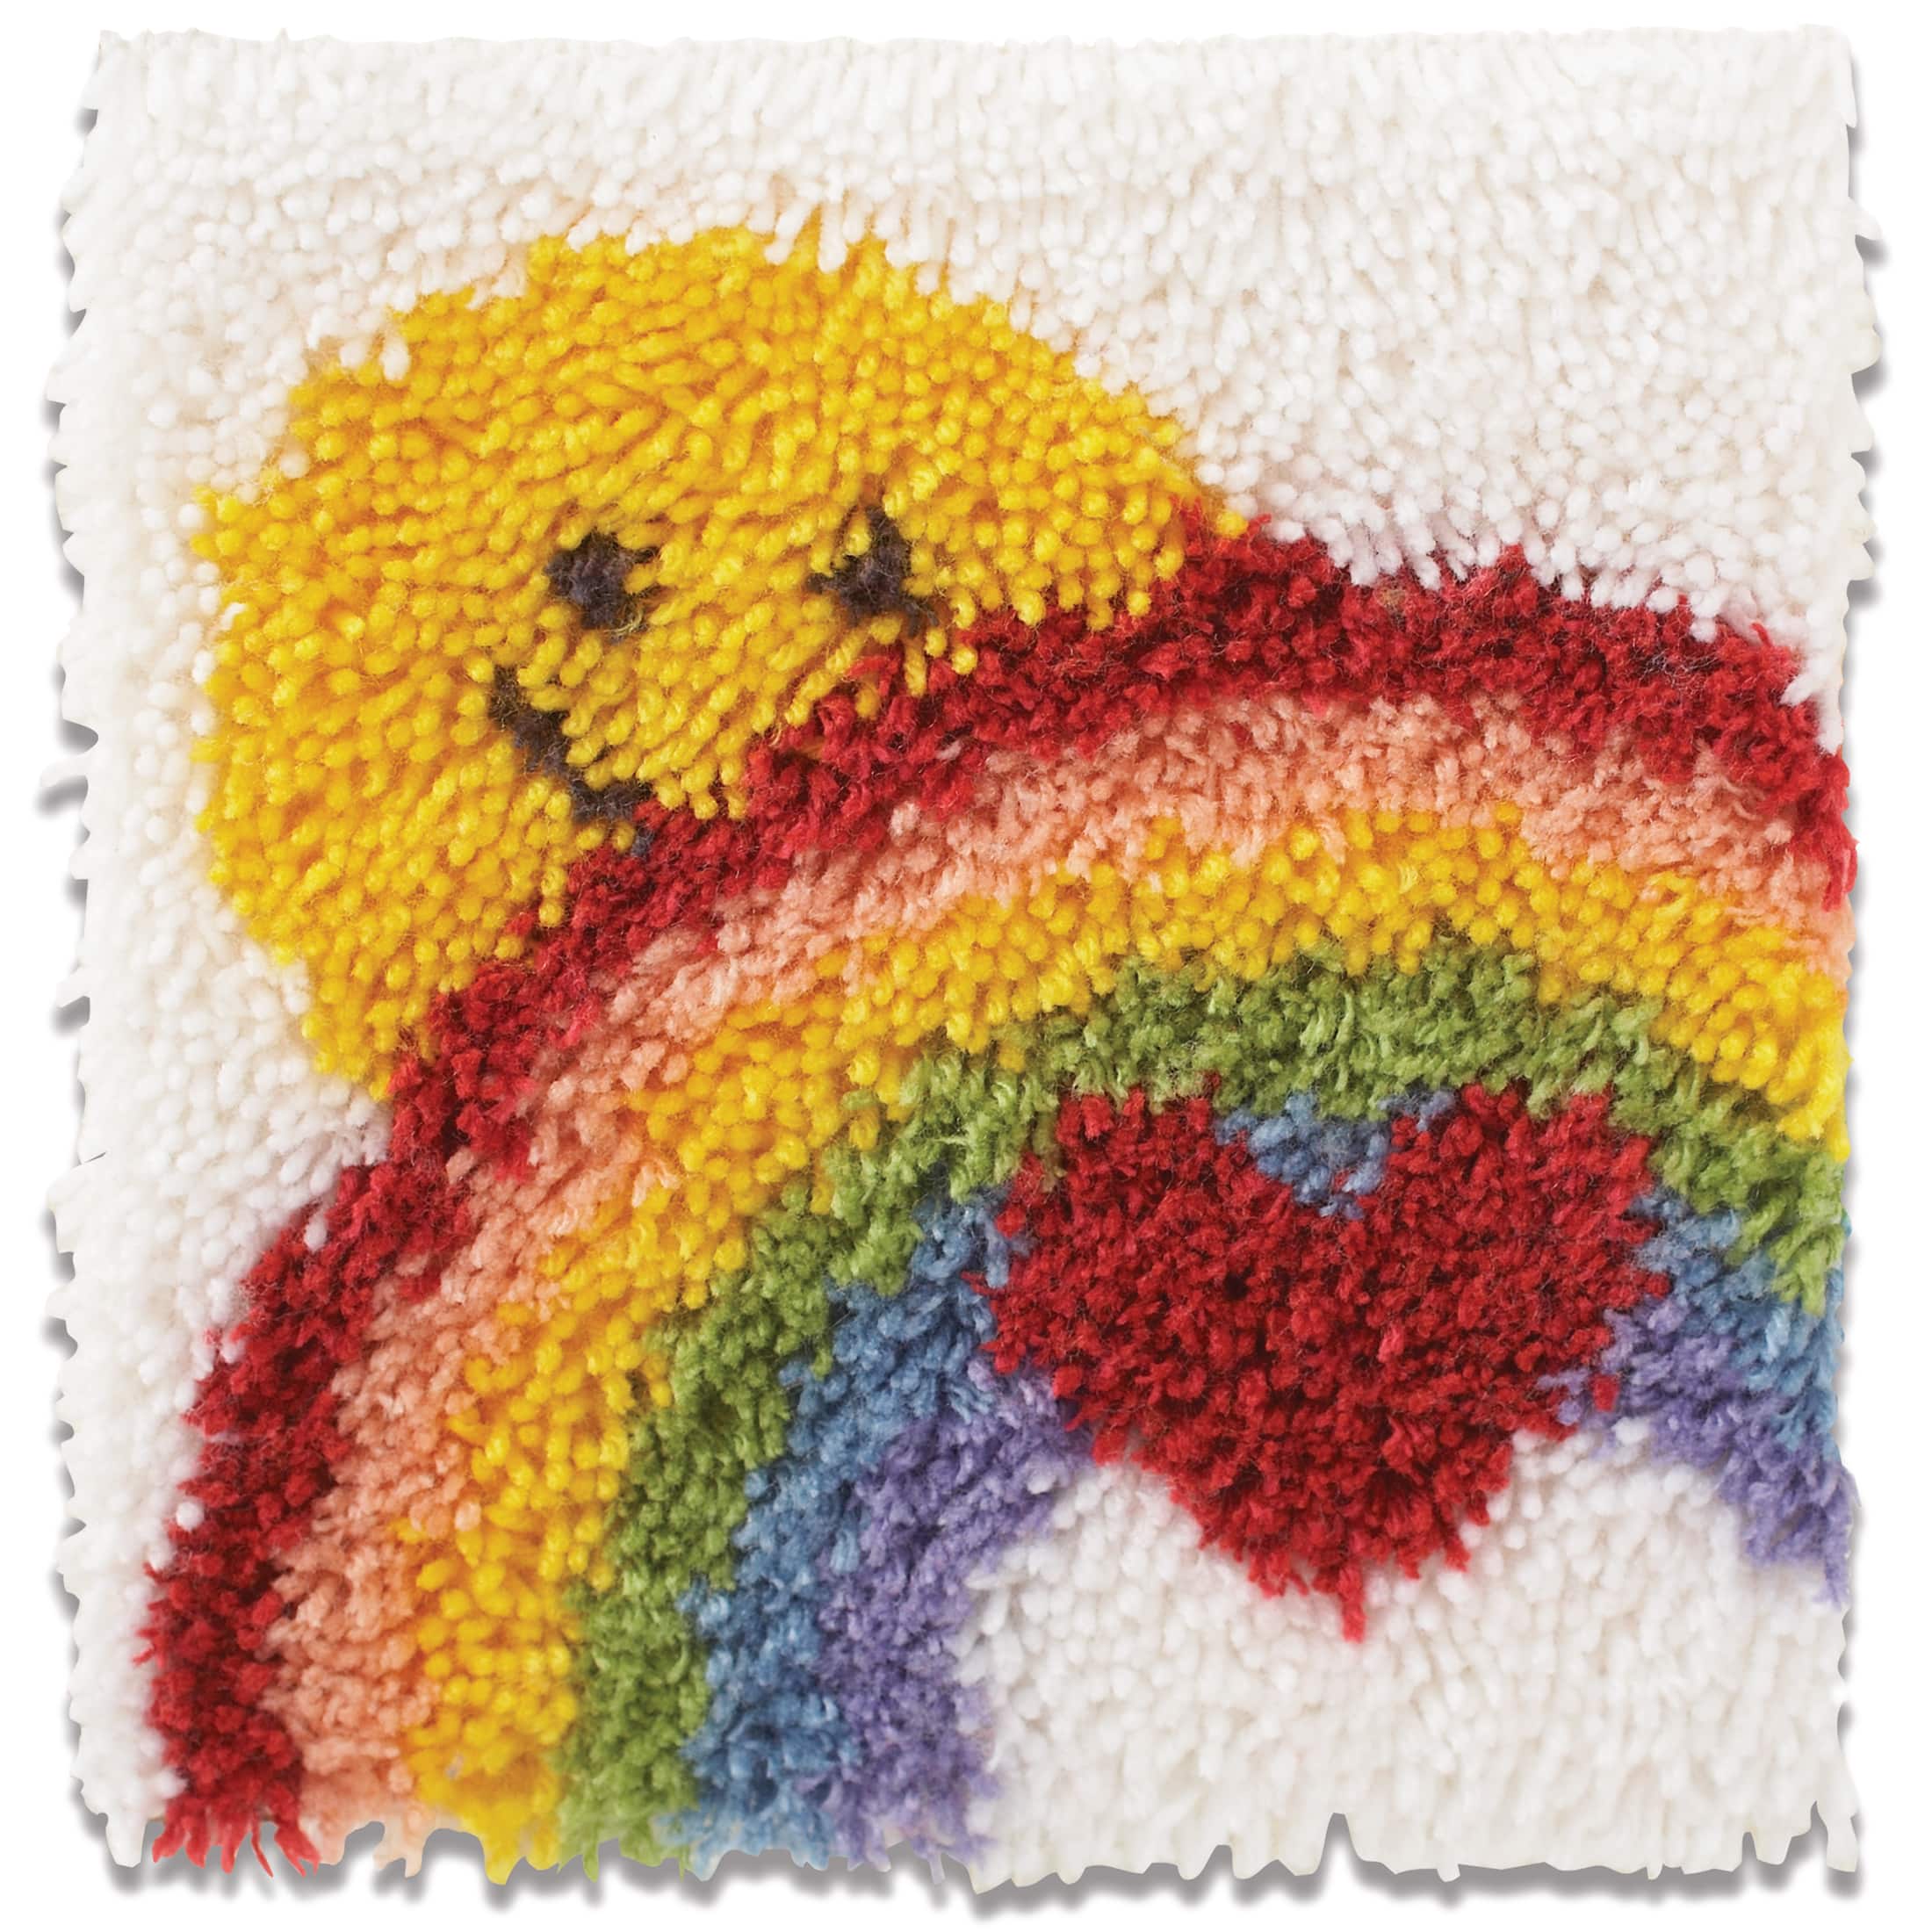 Wonderart 12 inch x 12 inch Latch Hook Kit, Sunshine Rainbow, Acrylic Yarn Cotton Canvas, Size: 12 x 12